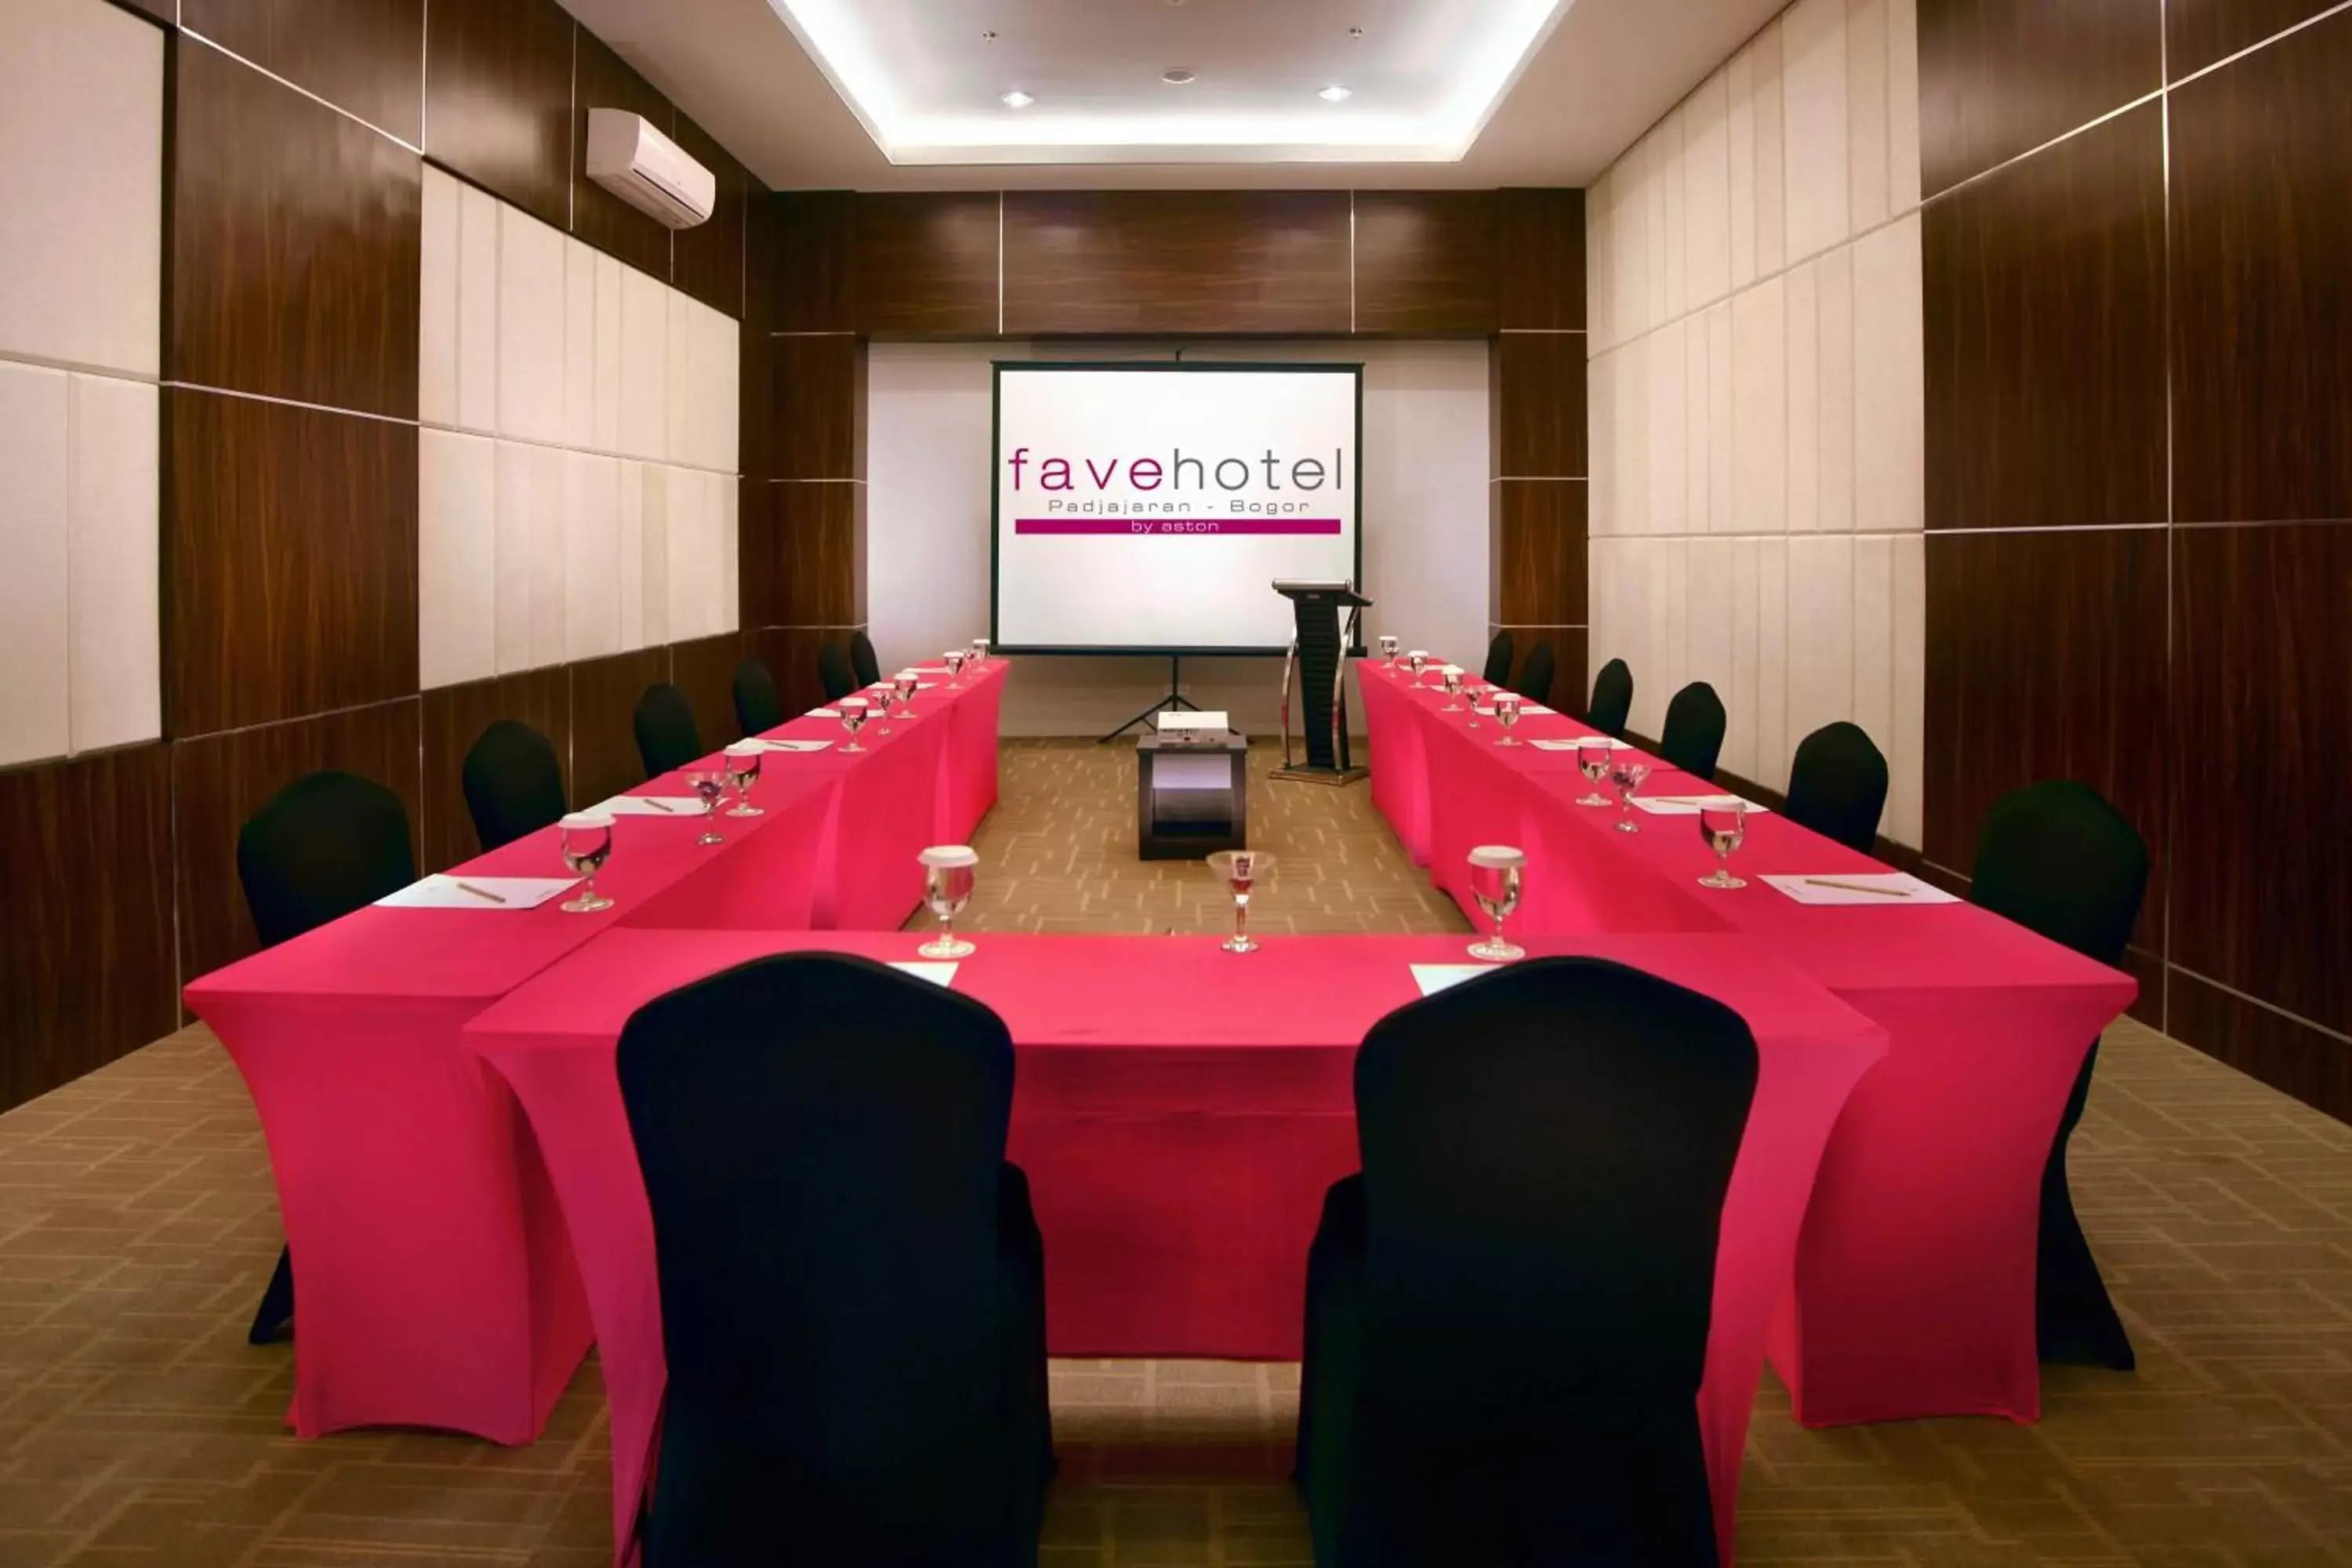 Meeting/conference room, Business Area/Conference Room in favehotel Padjajaran Bogor